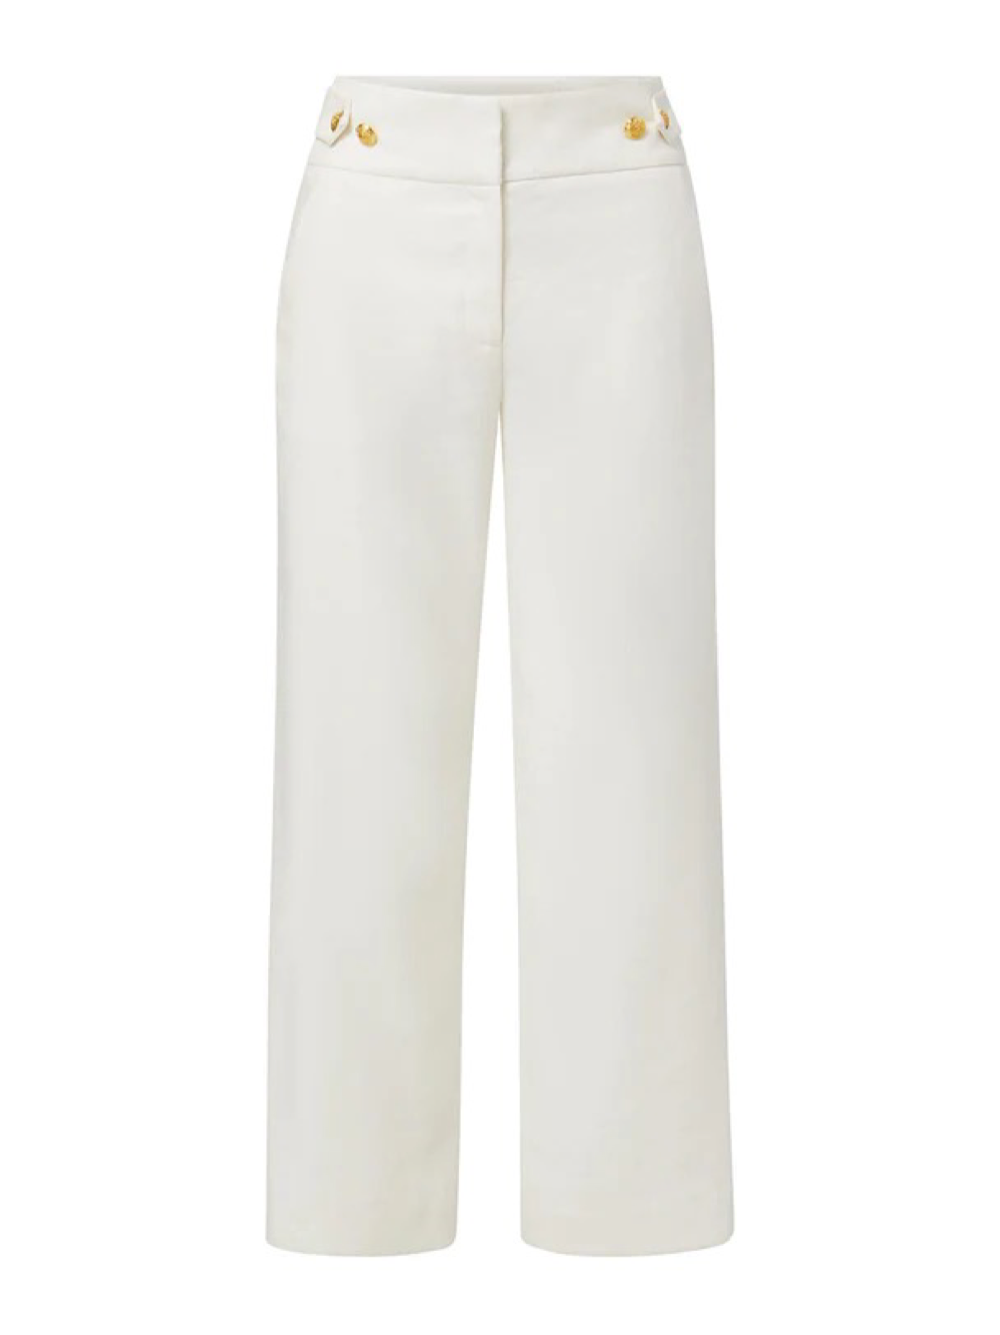 Veronica Beard Aubrie Pants in White